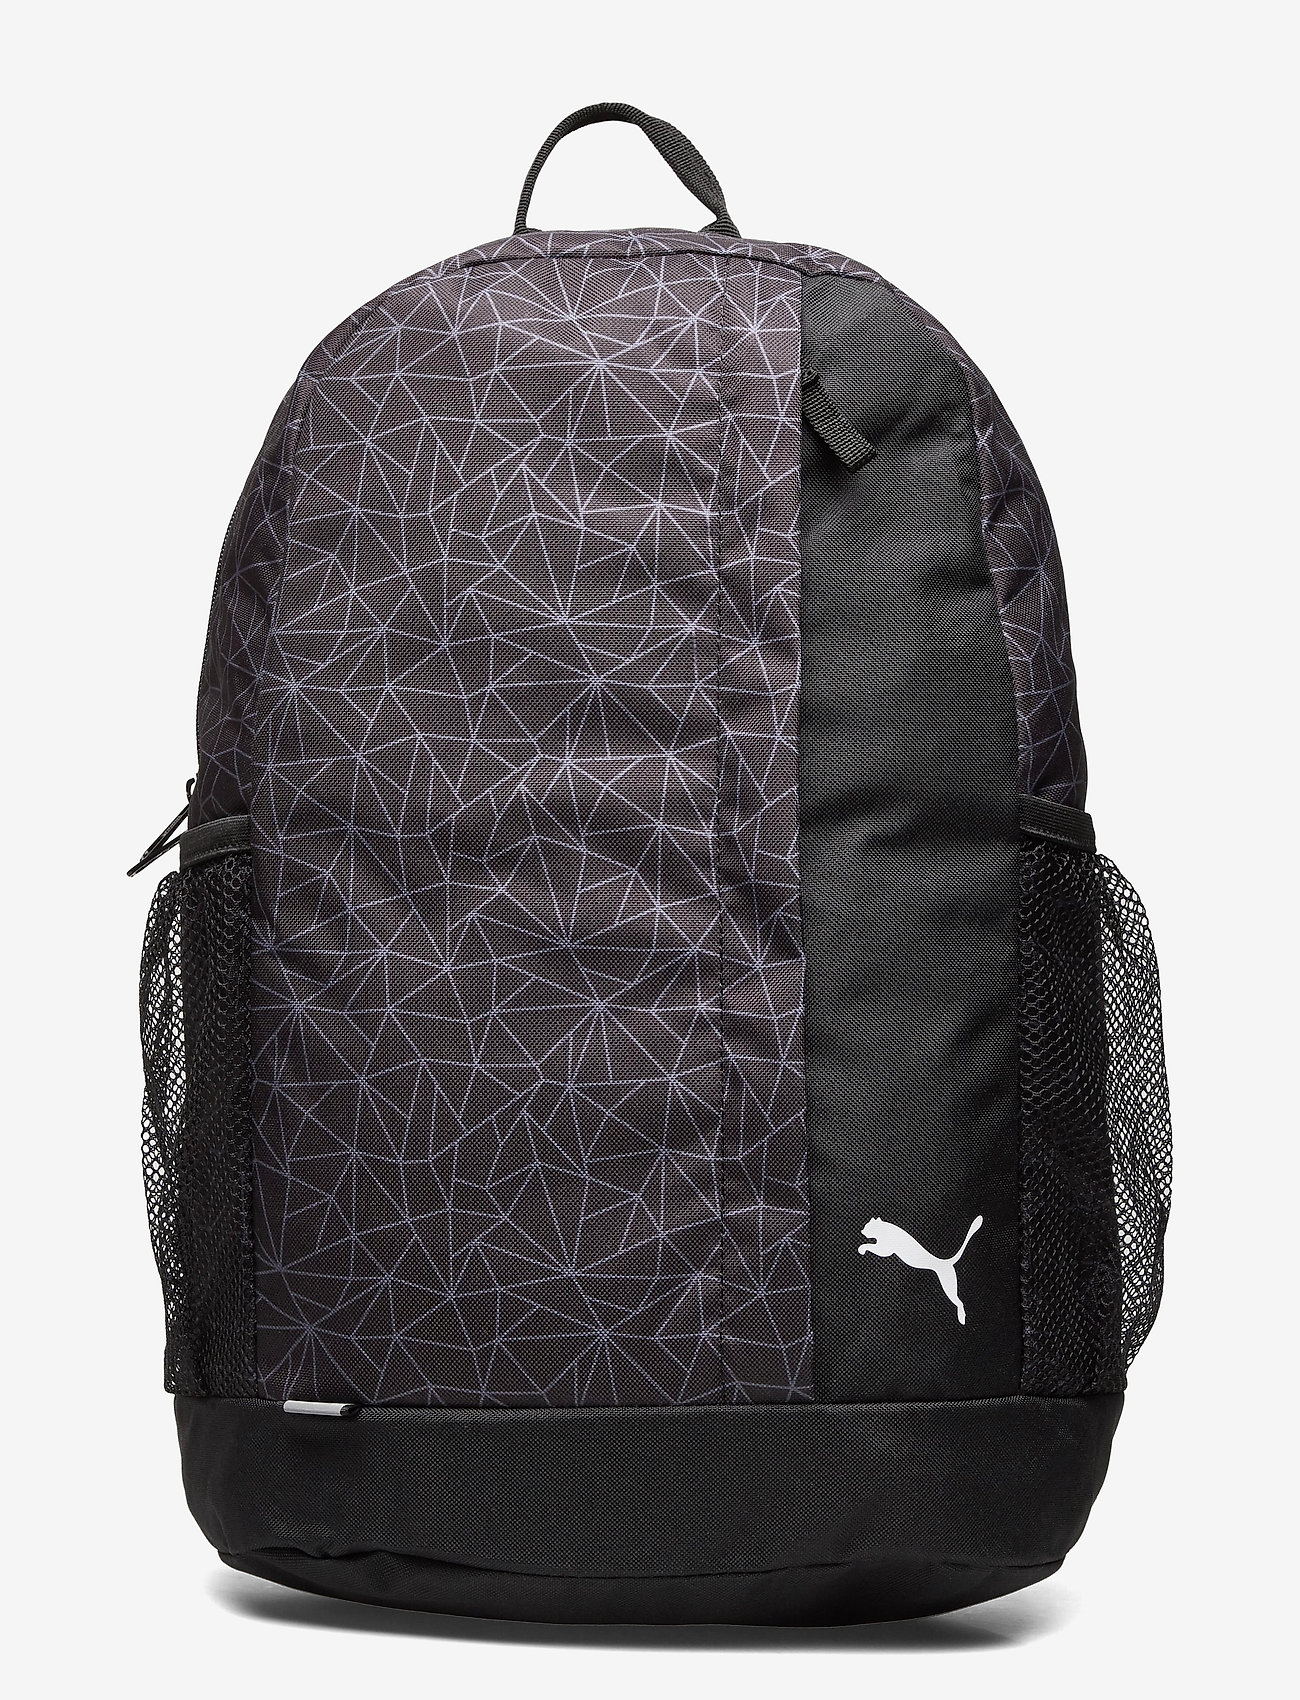 Puma Beta Backpack (Puma Black-aop) (17 